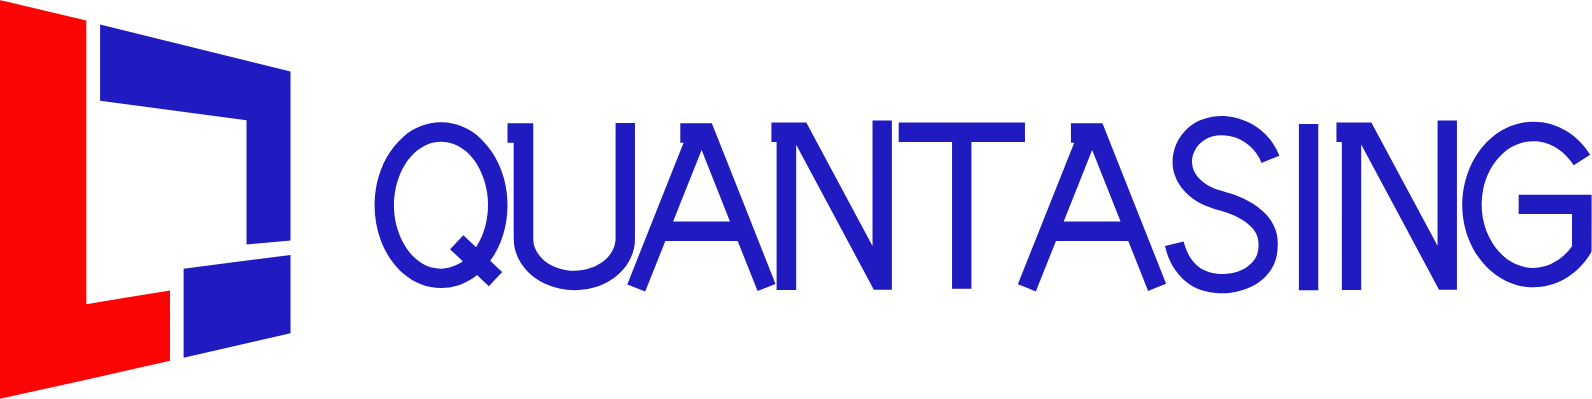 QuantaSing Group logo large (transparent PNG)